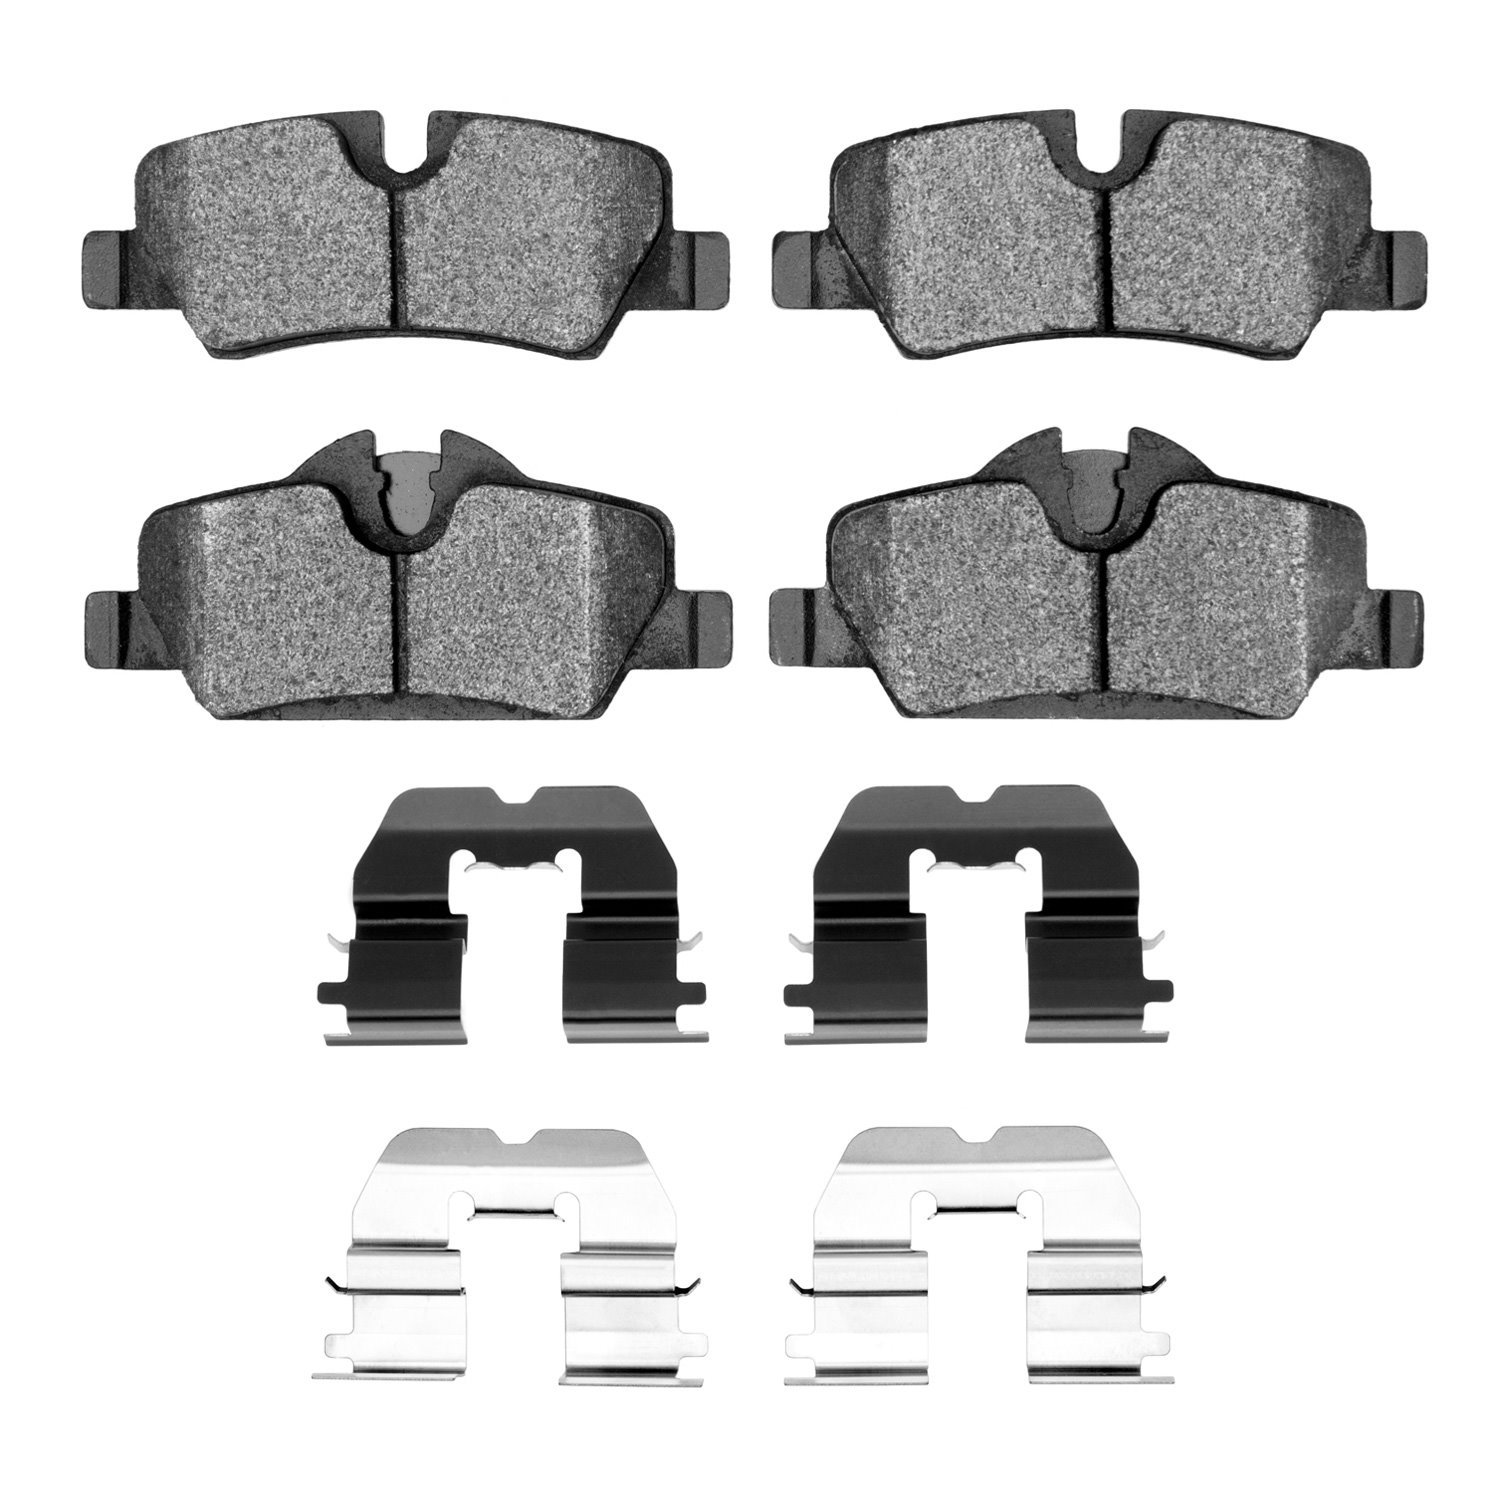 1310-1800-01 3000-Series Ceramic Brake Pads & Hardware Kit, Fits Select Mini, Position: Rear